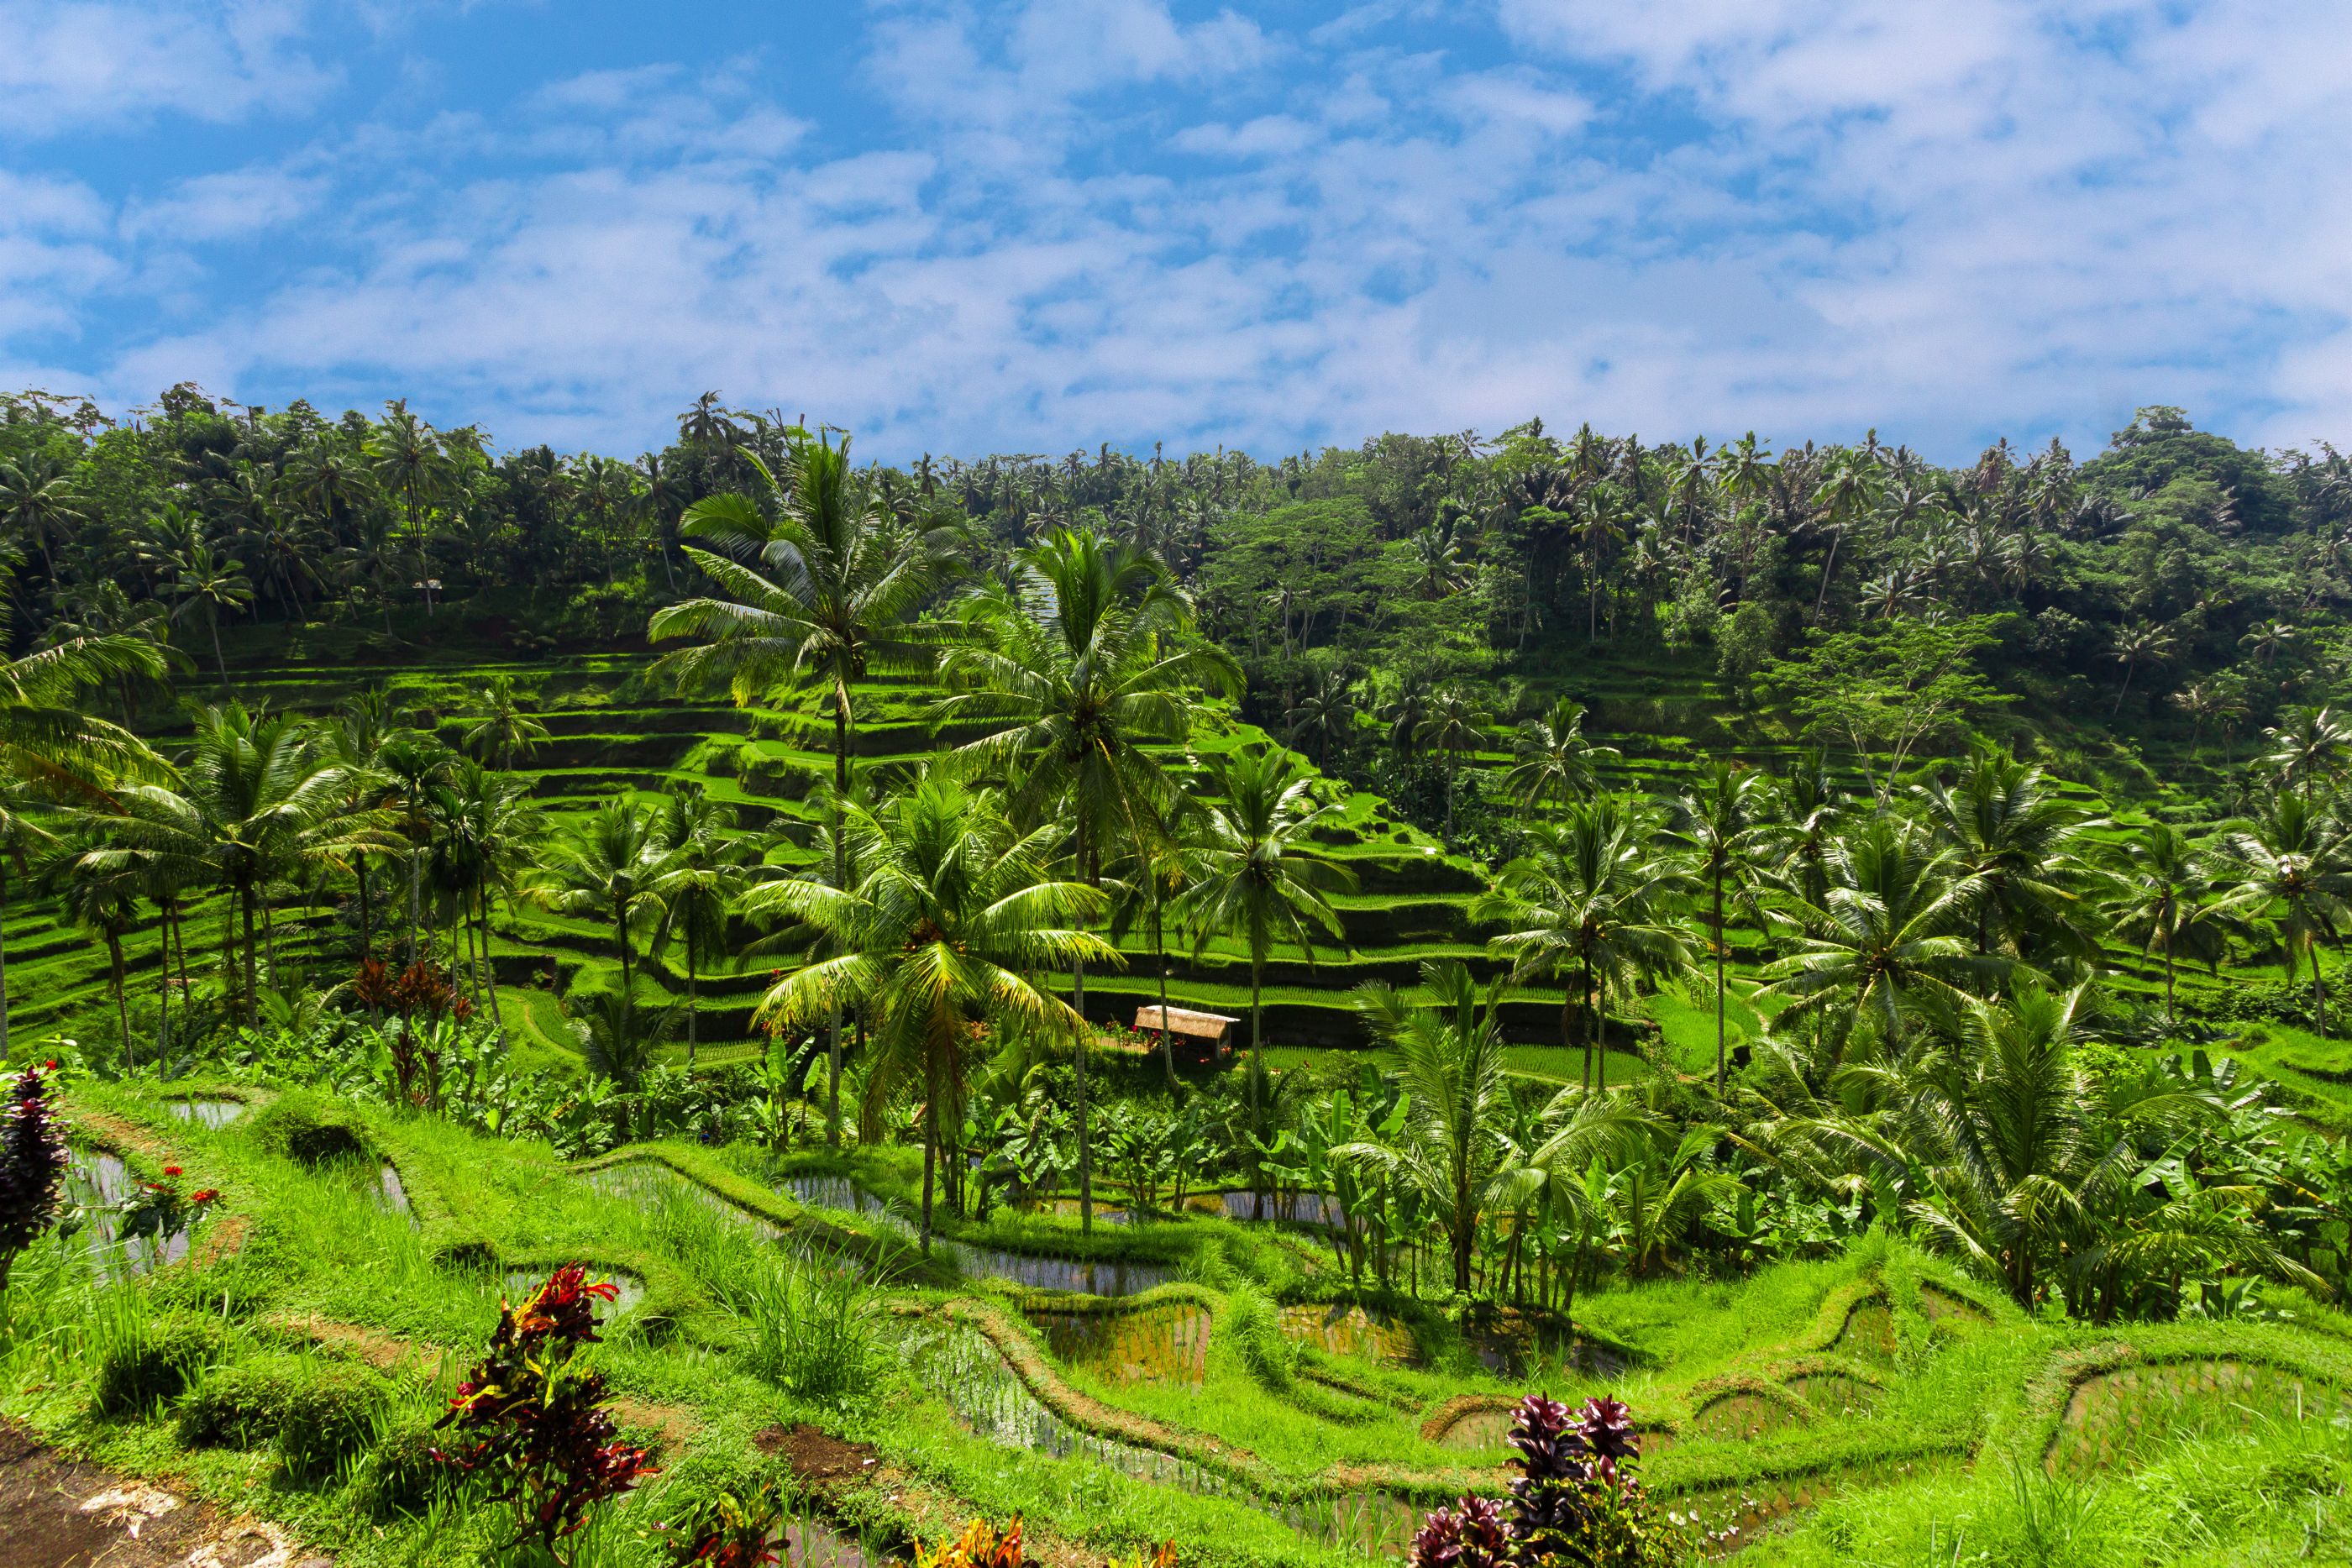 Rice fields in Ubud Bali, Indonesia